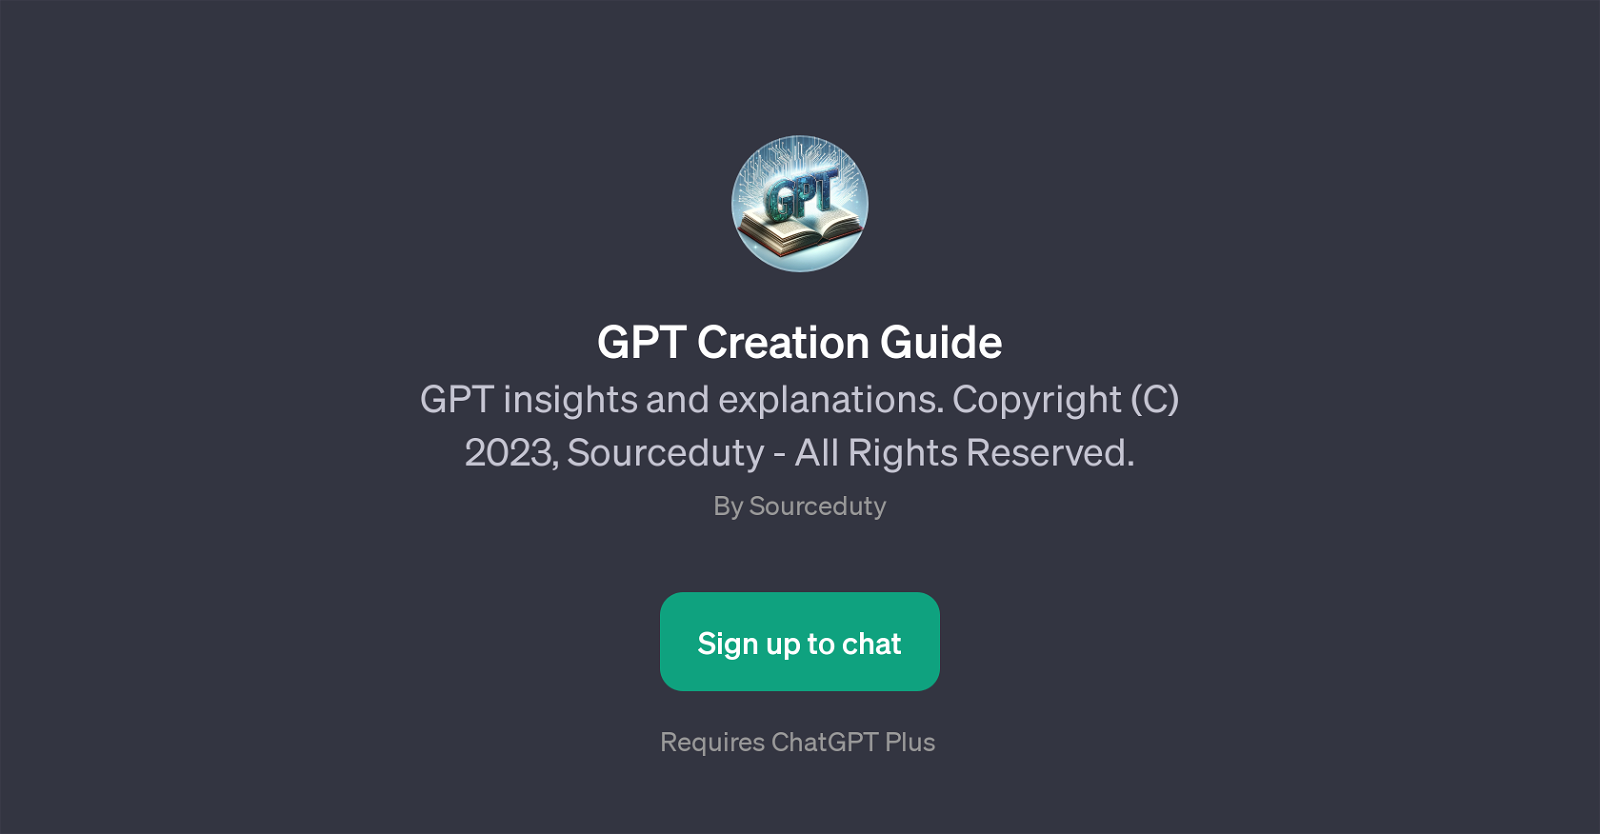 GPT Creation Guide website